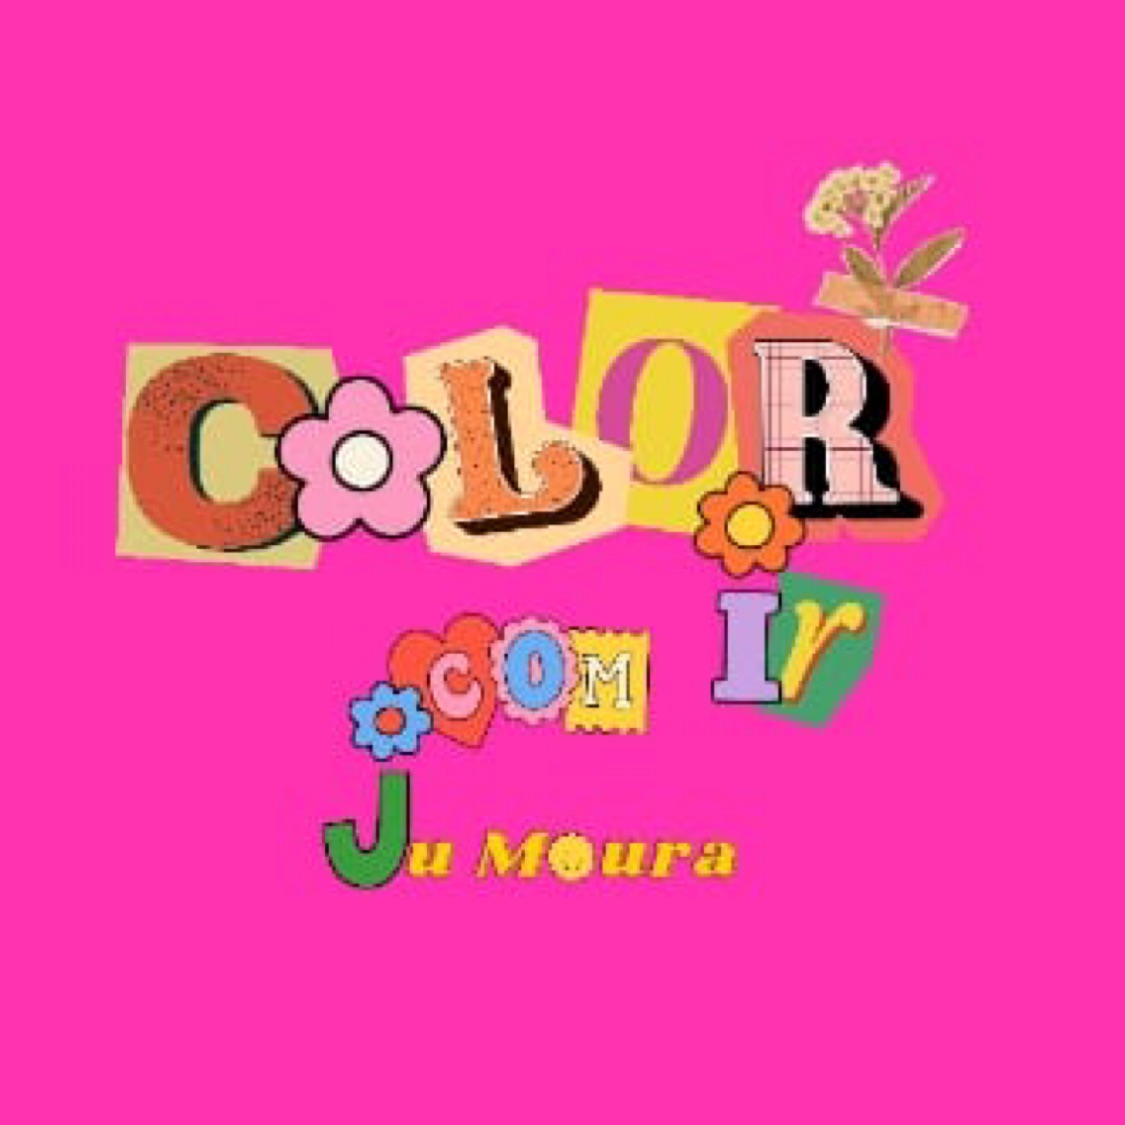 Colorir com Ju Moura, Loja Online